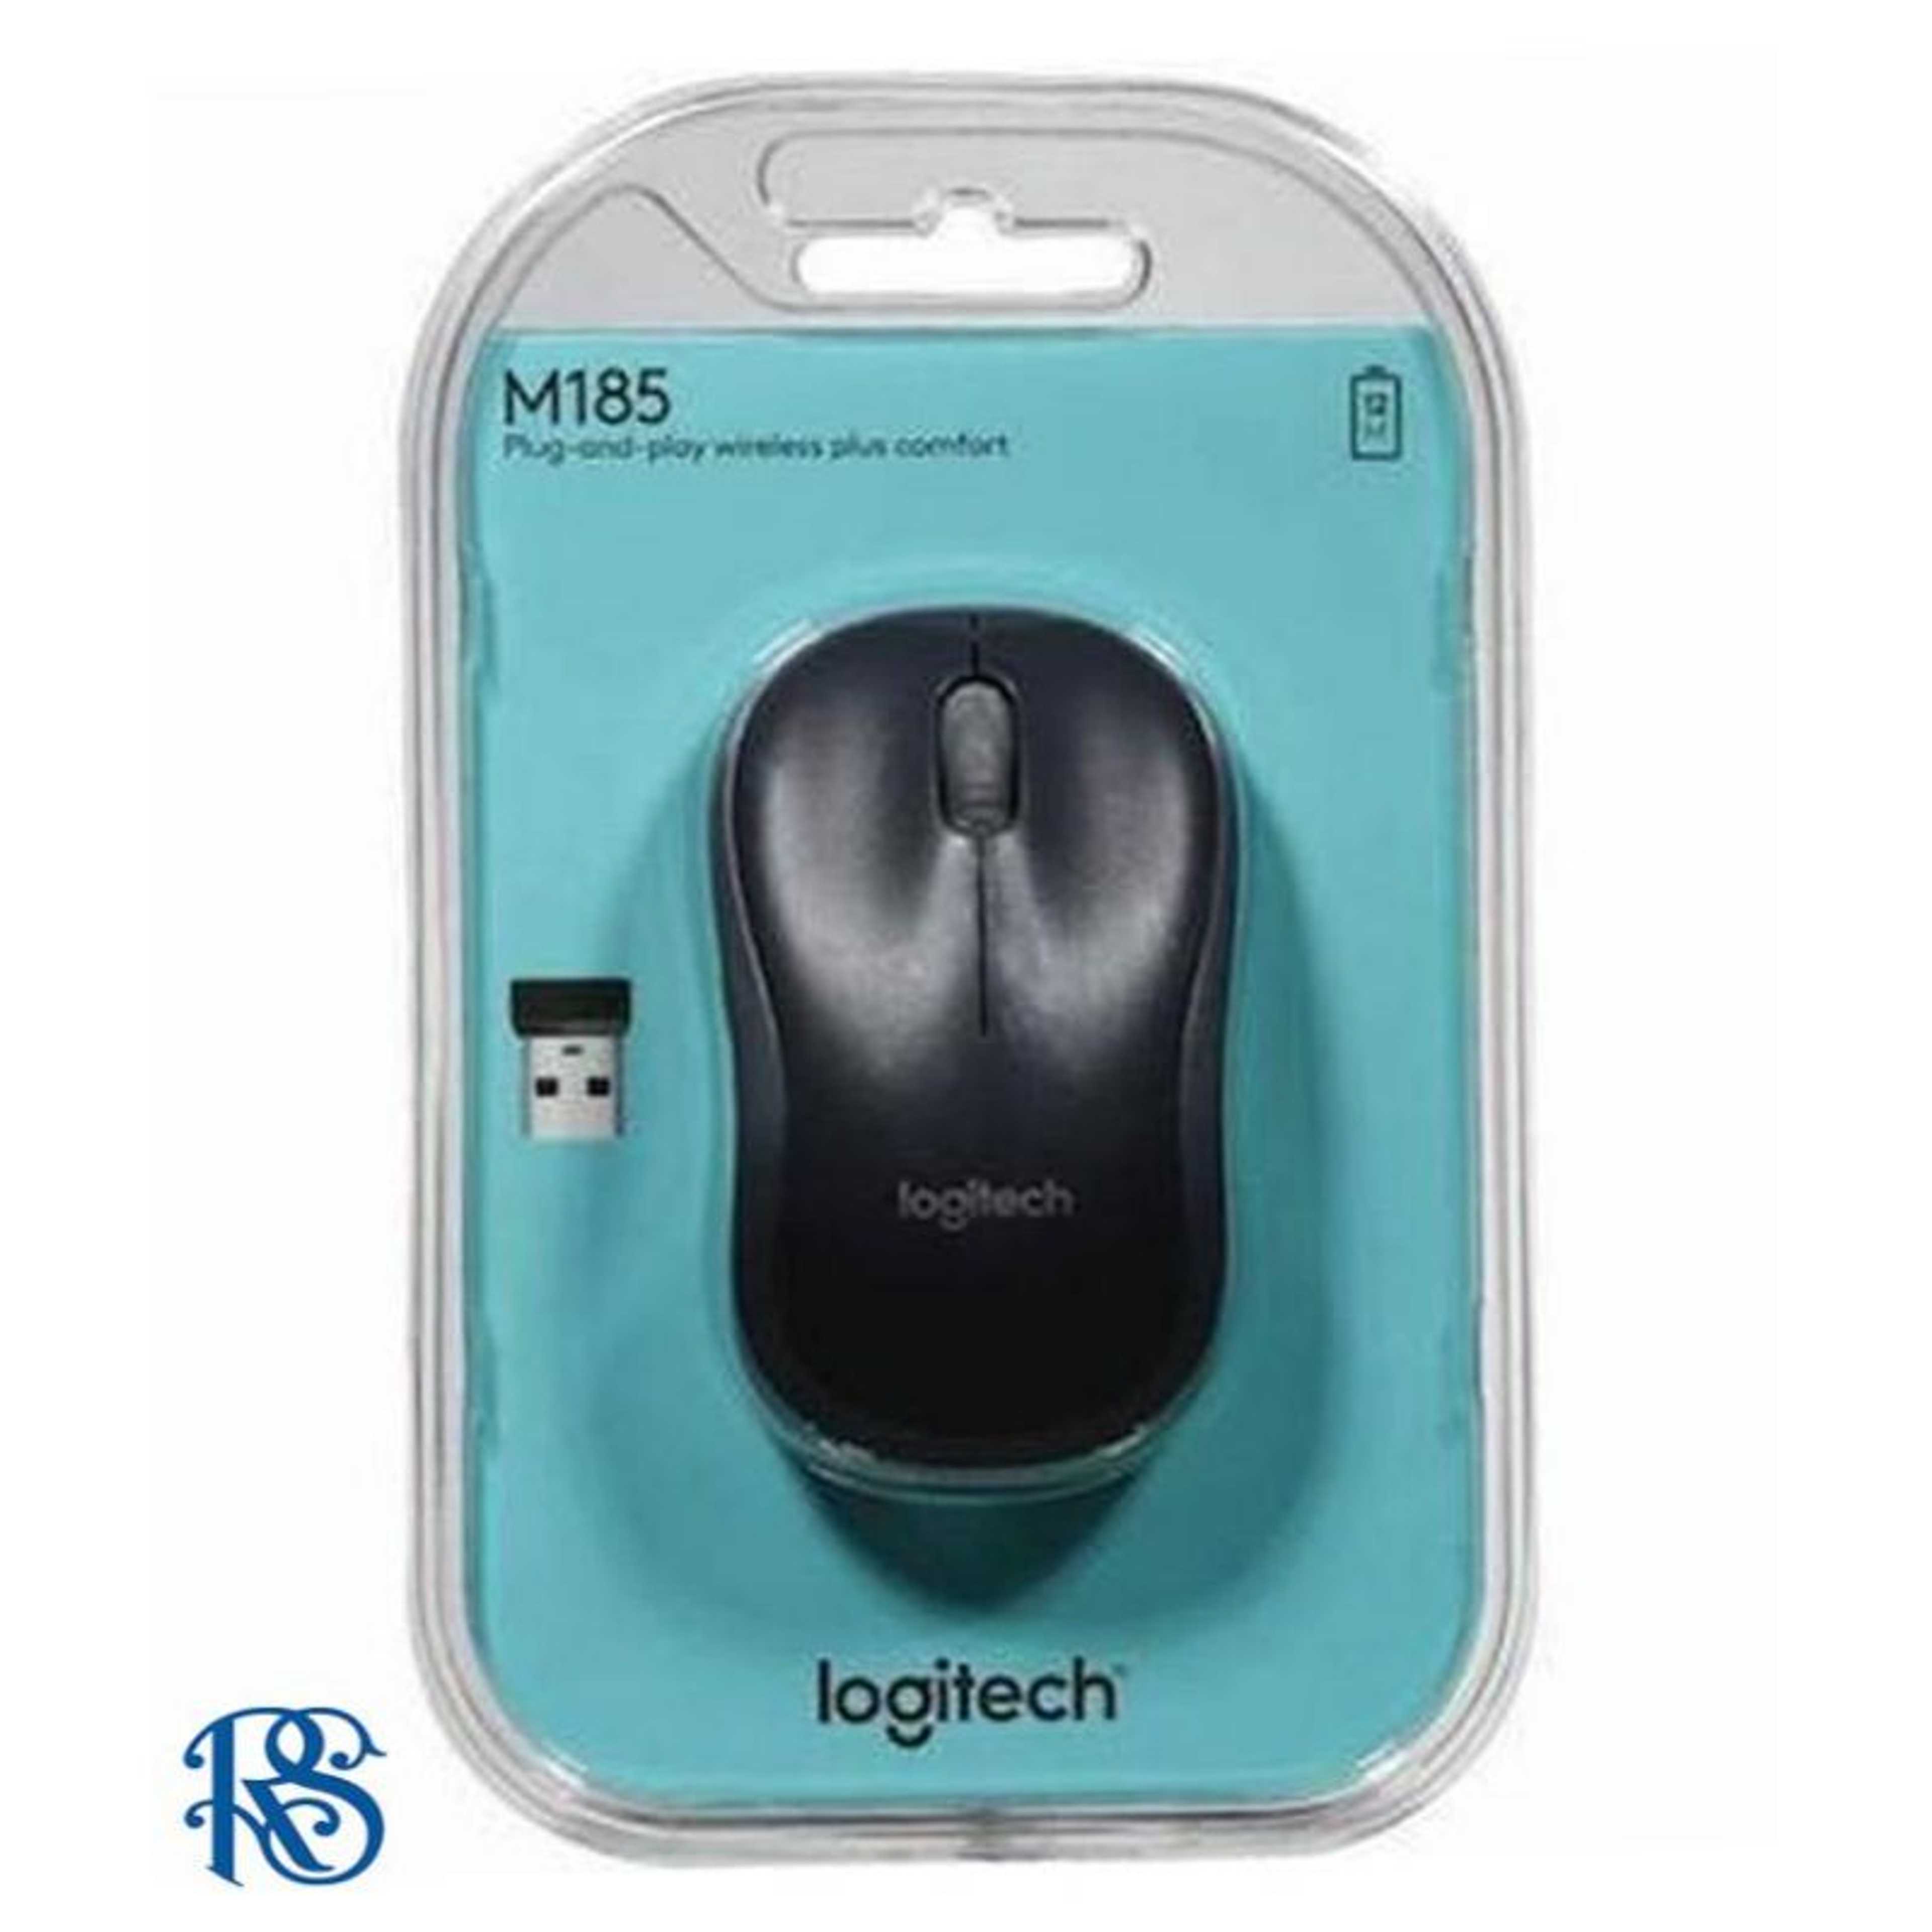 Logitech M185 High Quality Wireless Mouse - Swift Gray